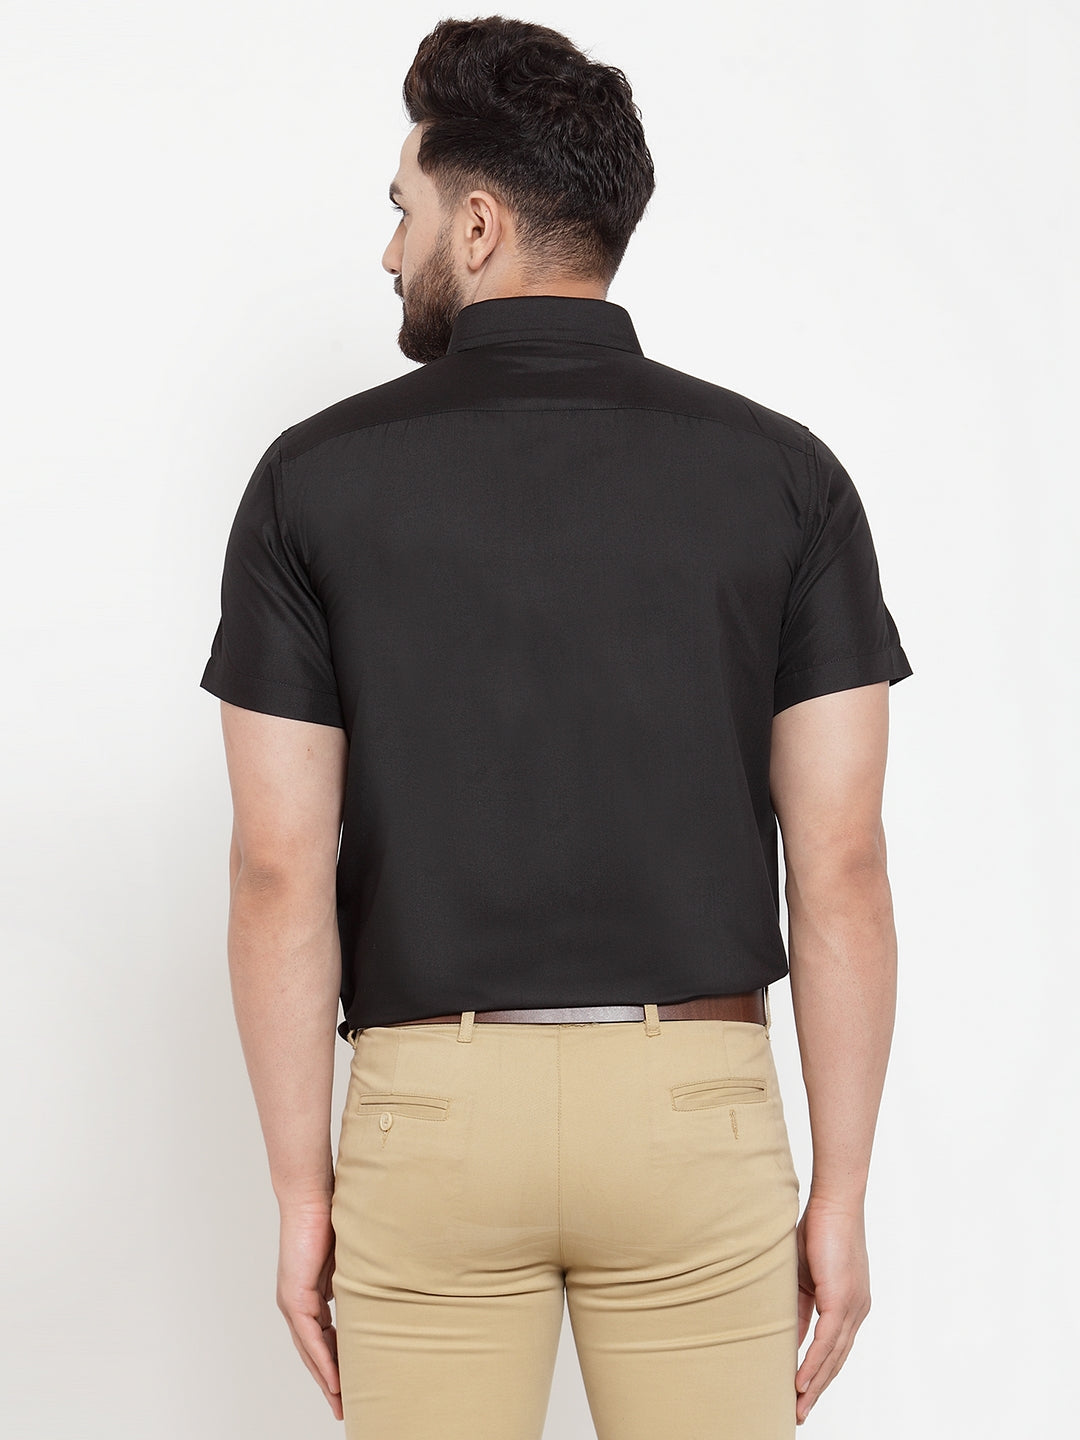 Men's Black Cotton Half Sleeves Solid Formal Shirts ( SF 754Black ) - Jainish